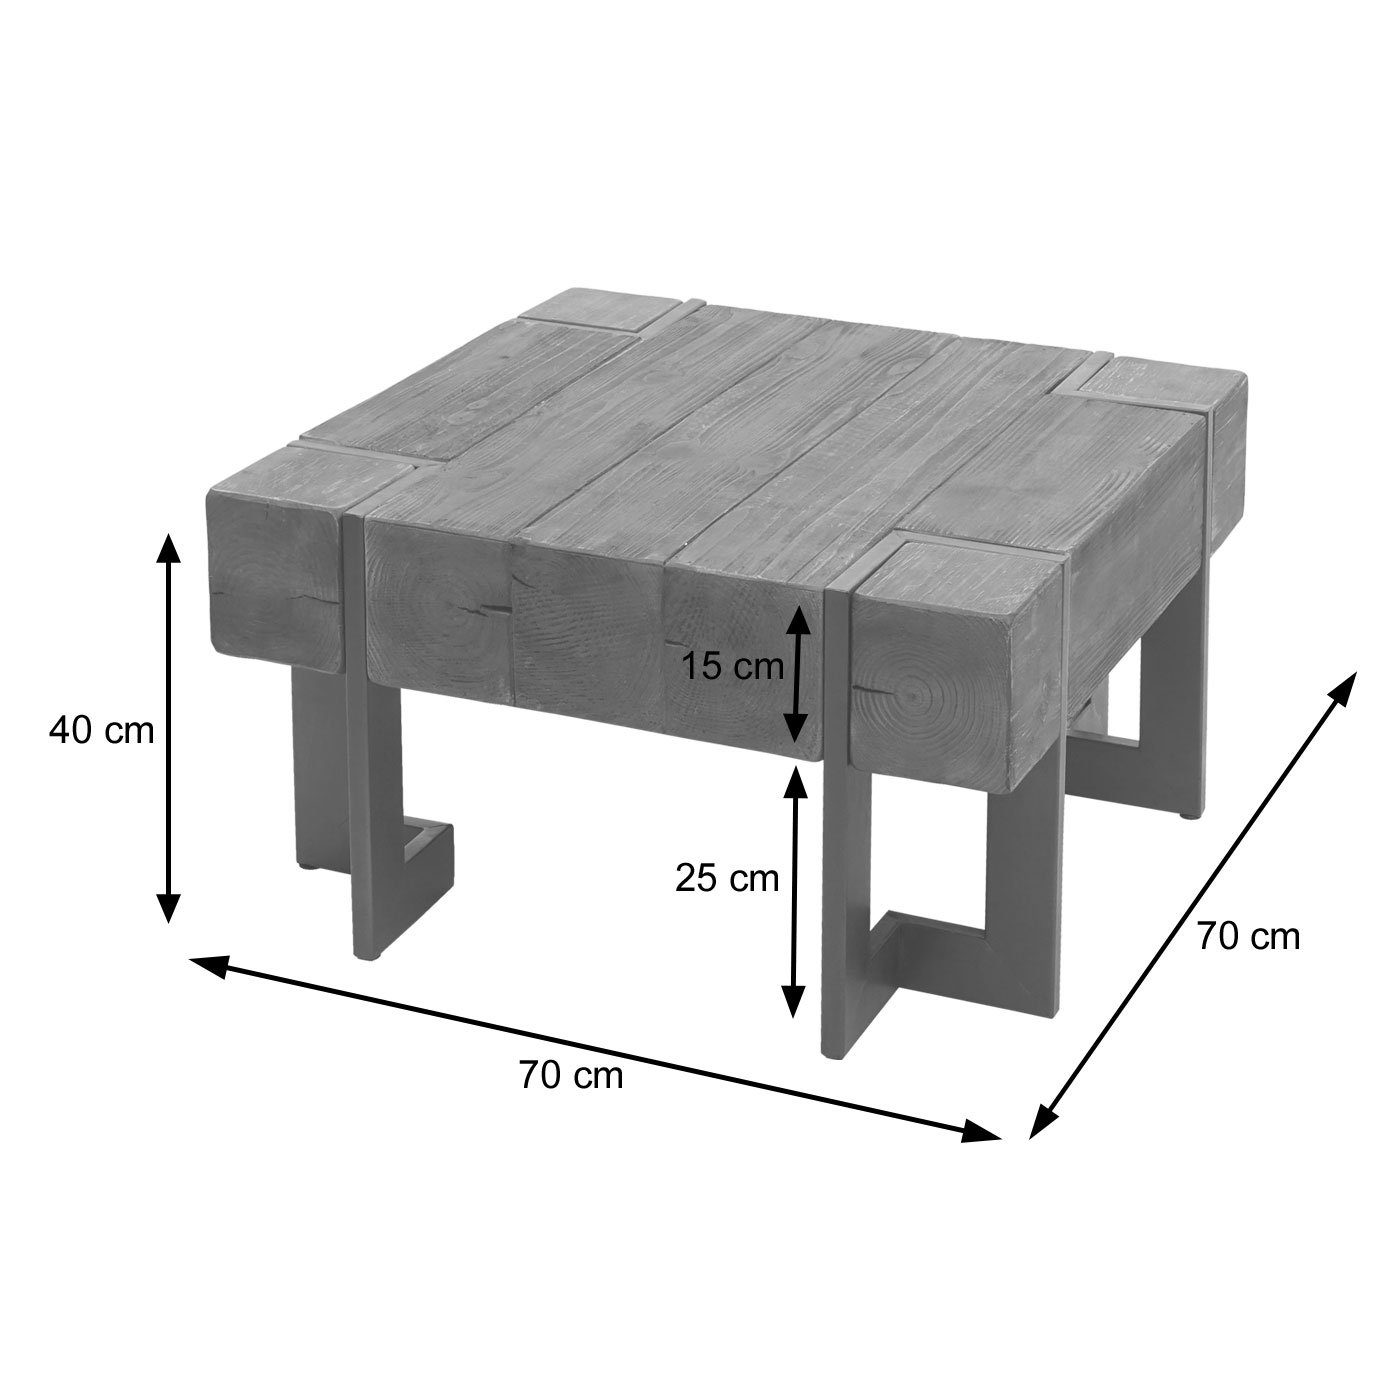 Industrial MCW-A15-C, MCW Fußbodenschoner, | Standfest, Inklusive Look, braun Couchtisch quadratisch Braun